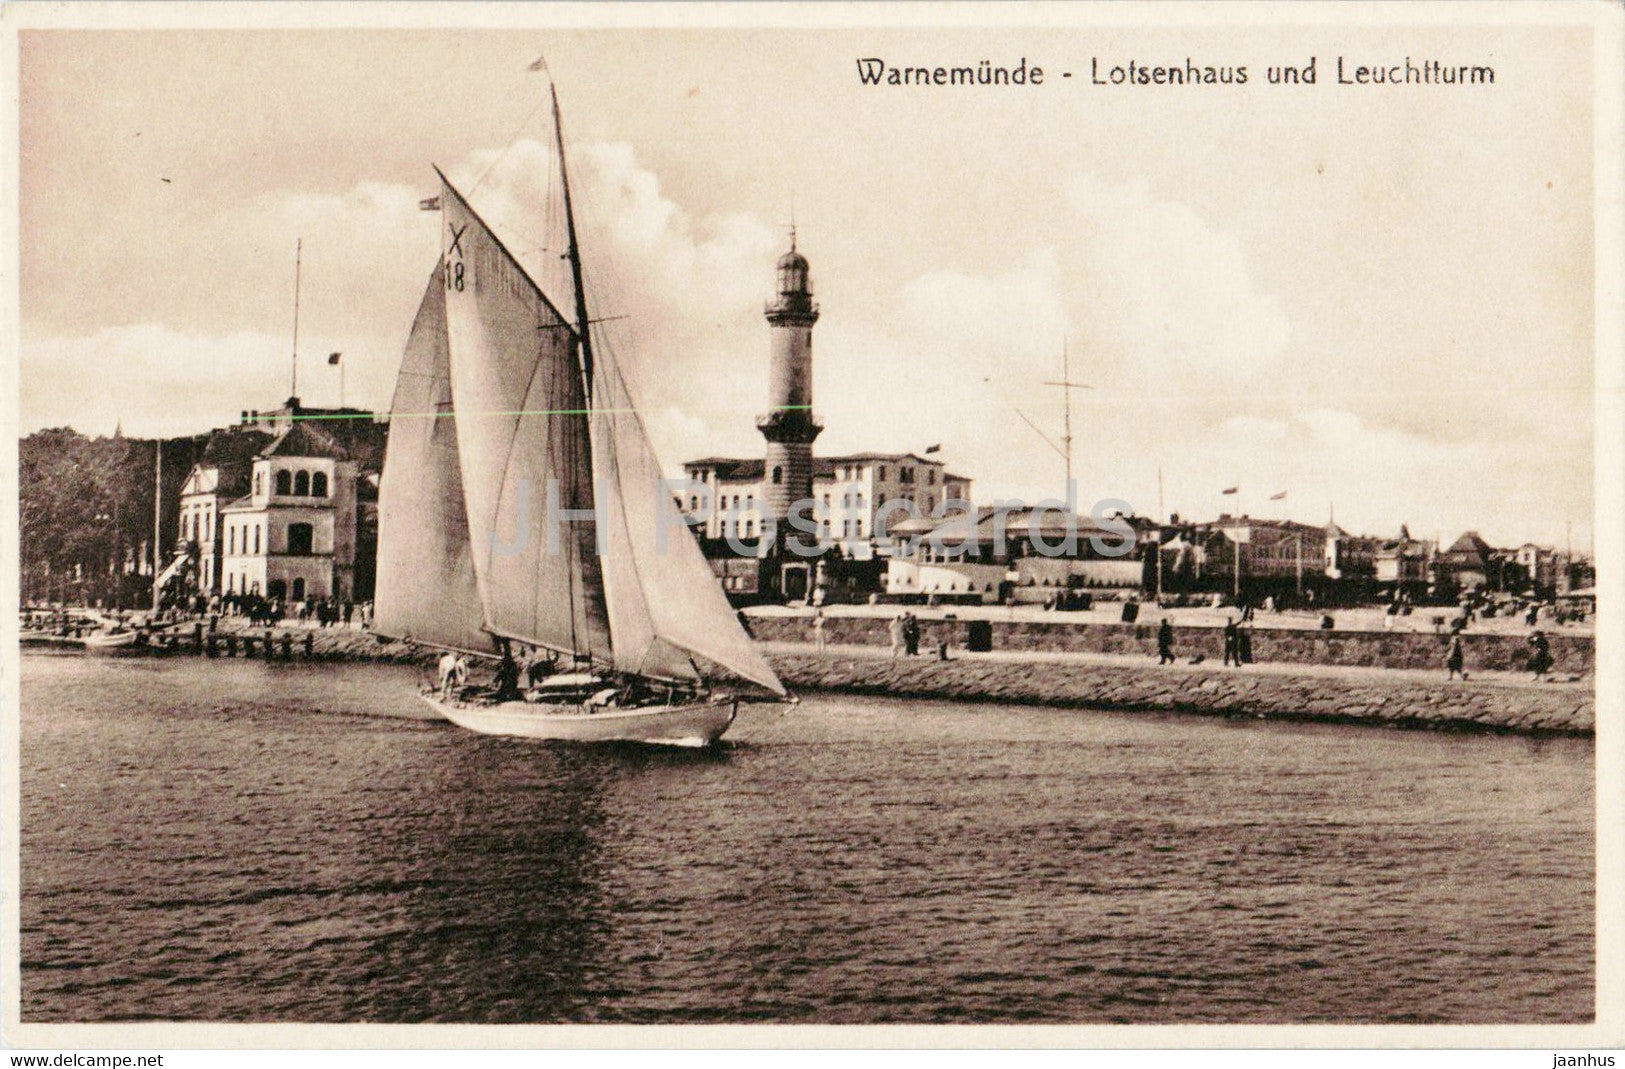 Warnemunde - Lotsenhaus und Leuchtturm - sailing boat - lighthouse - old postcard - Germany - unused - JH Postcards